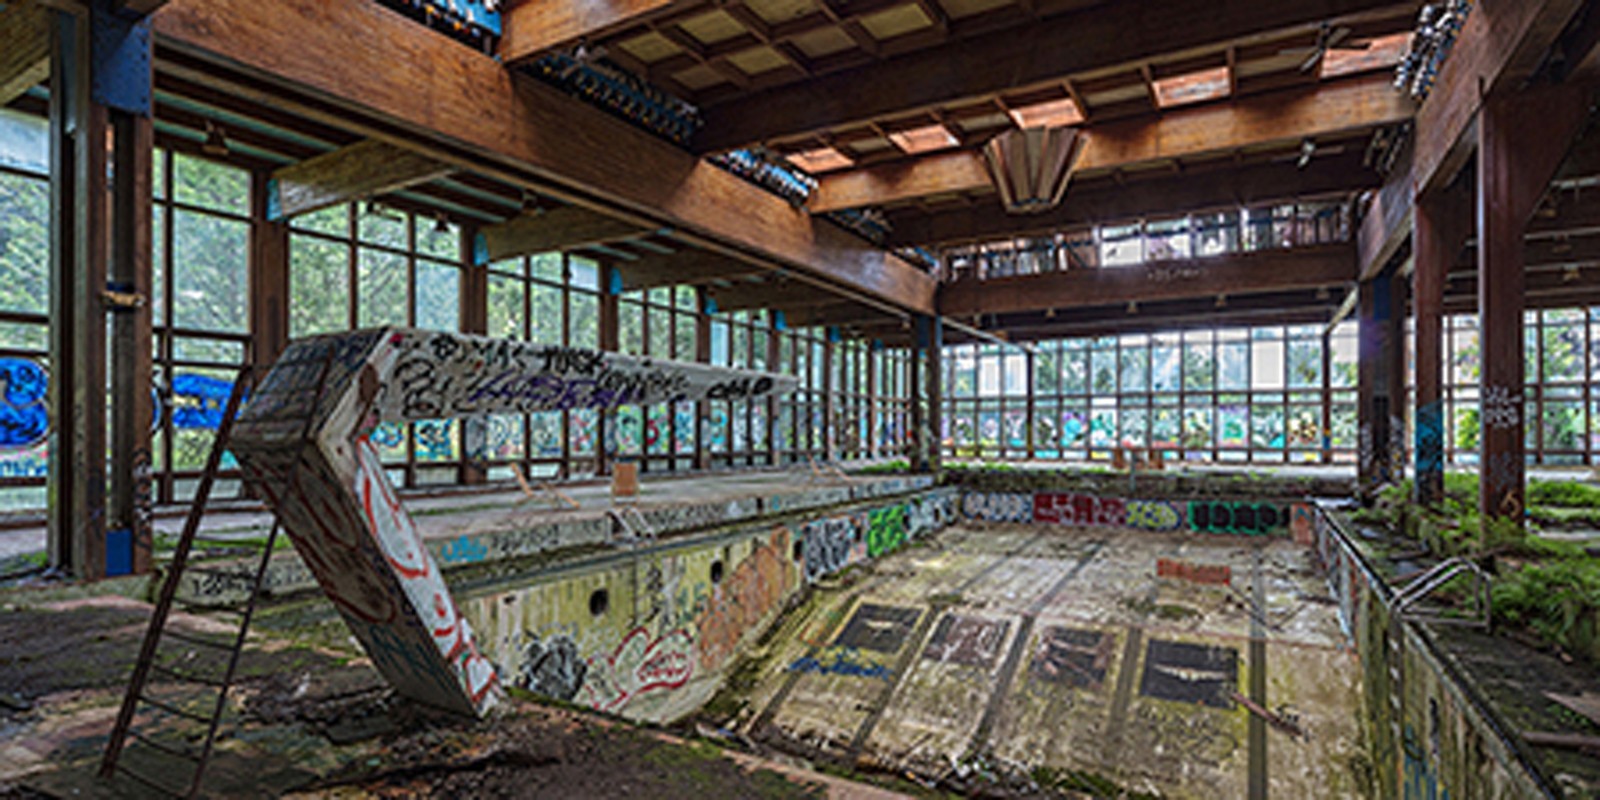 Richard Berenholtz - Abandoned Resort Pool, Upstate NY (detail)